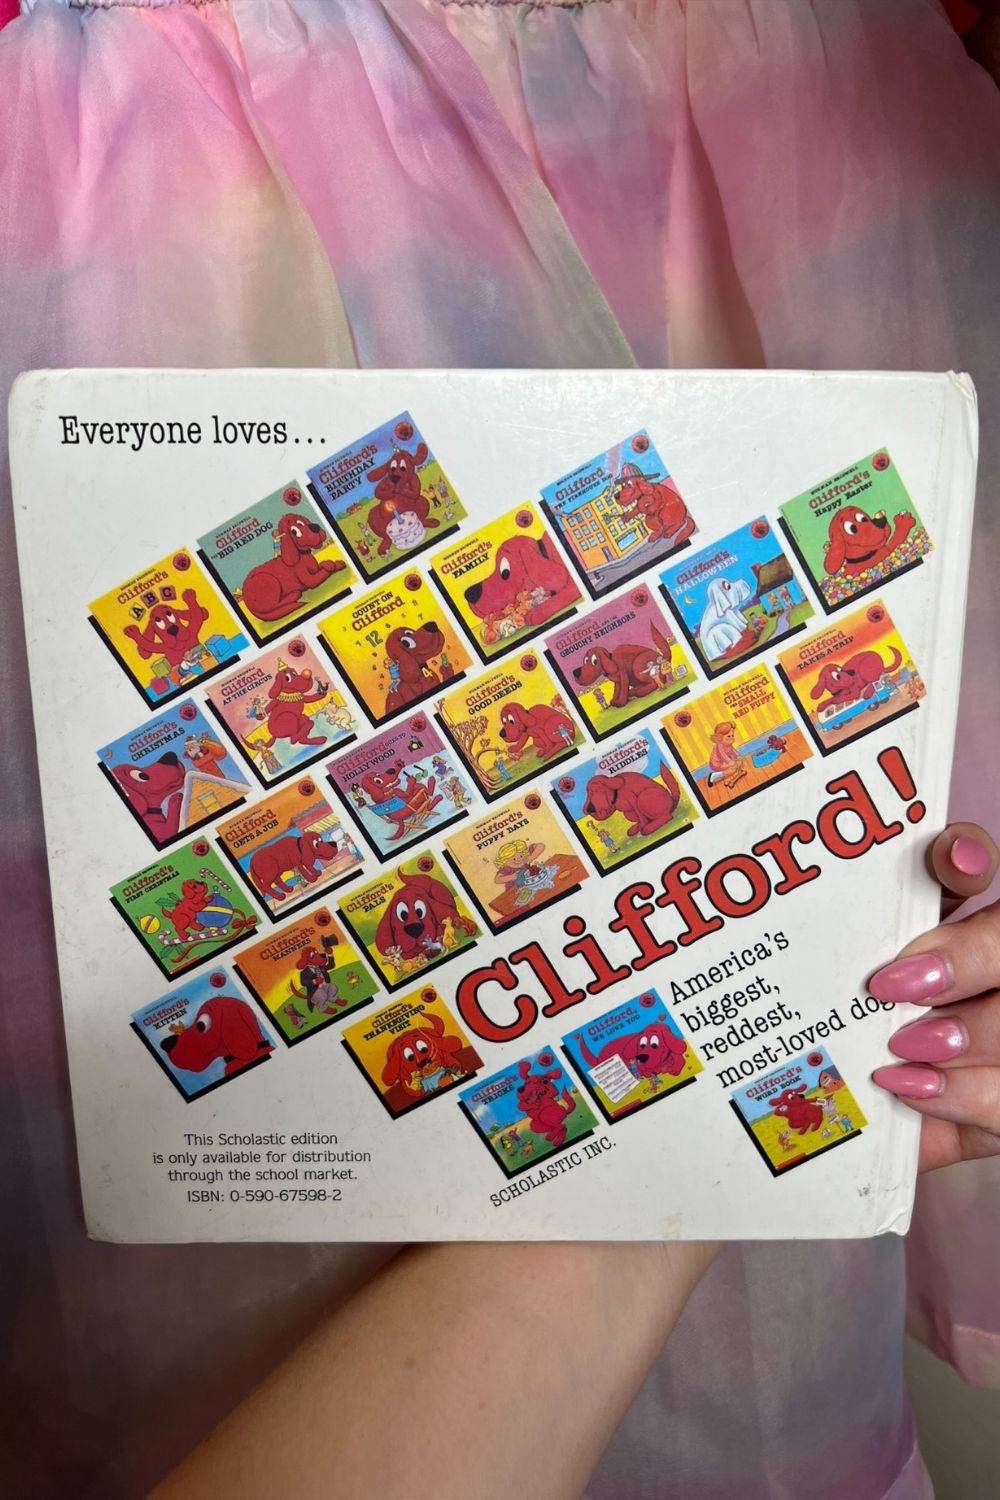 CLIFFORD BOOK - CLIFFORD'S BIRTHDAY TREASURY*